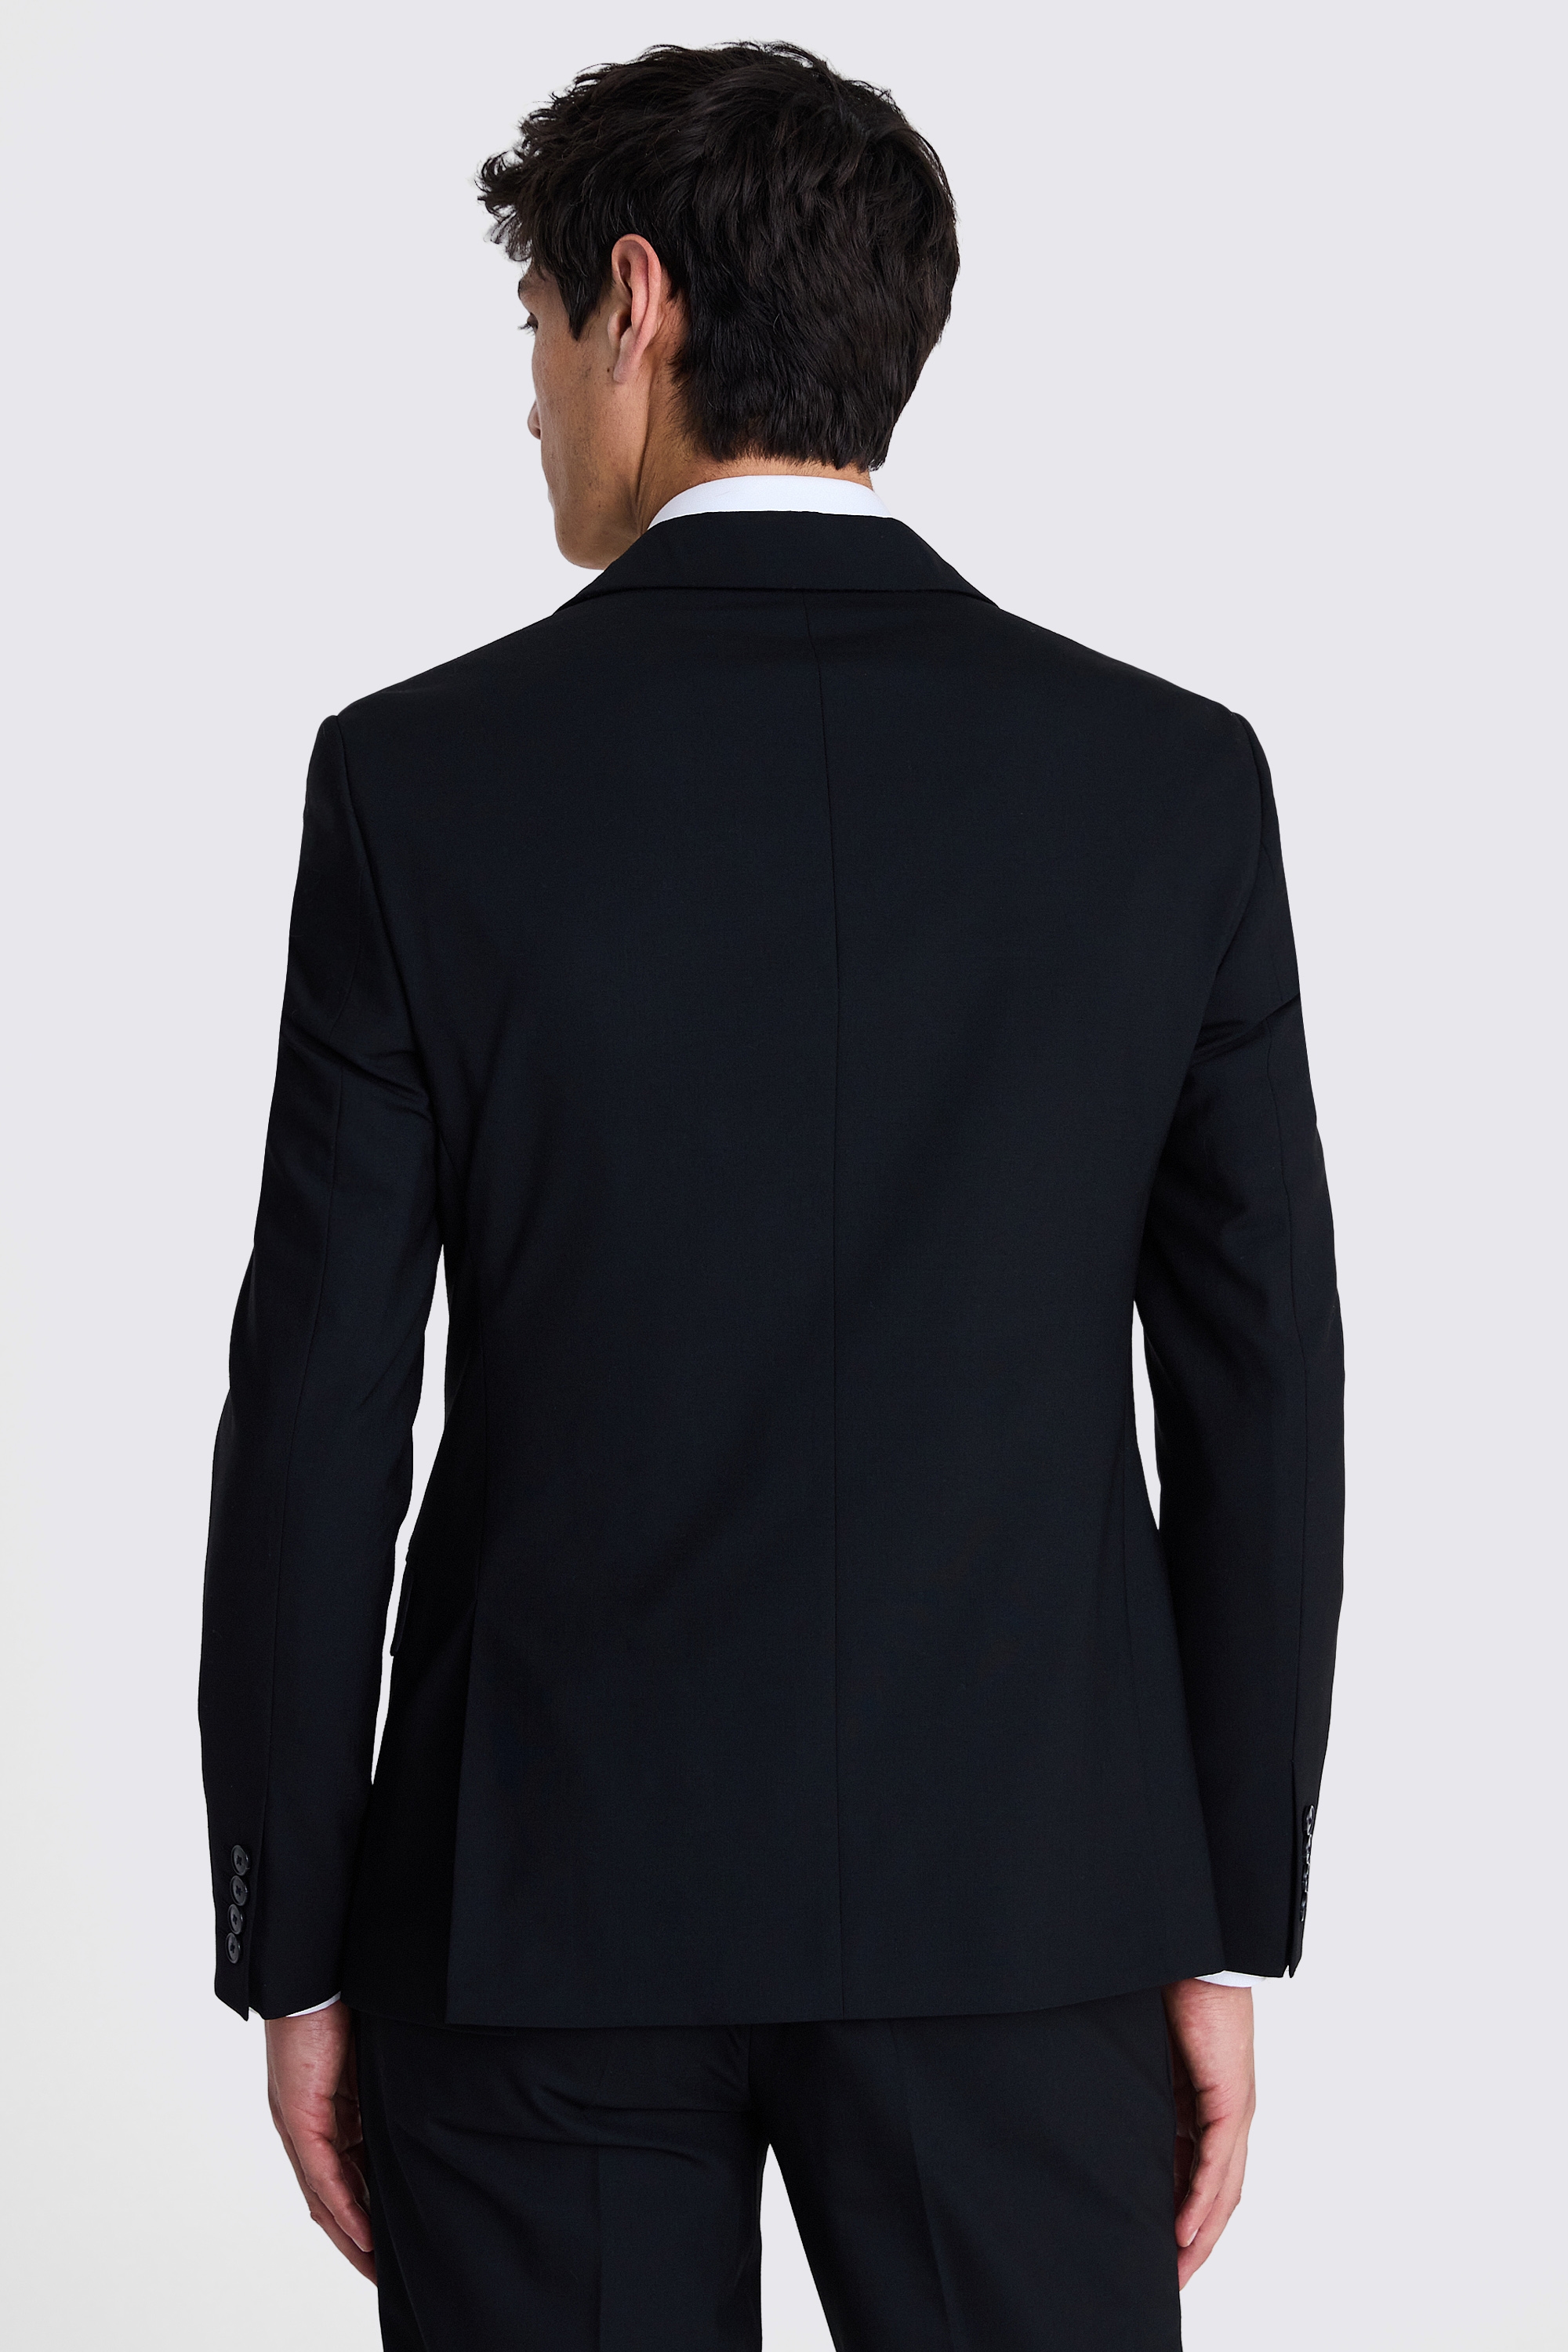 DKNY Slim Fit Black Jacket | Buy Online at Moss